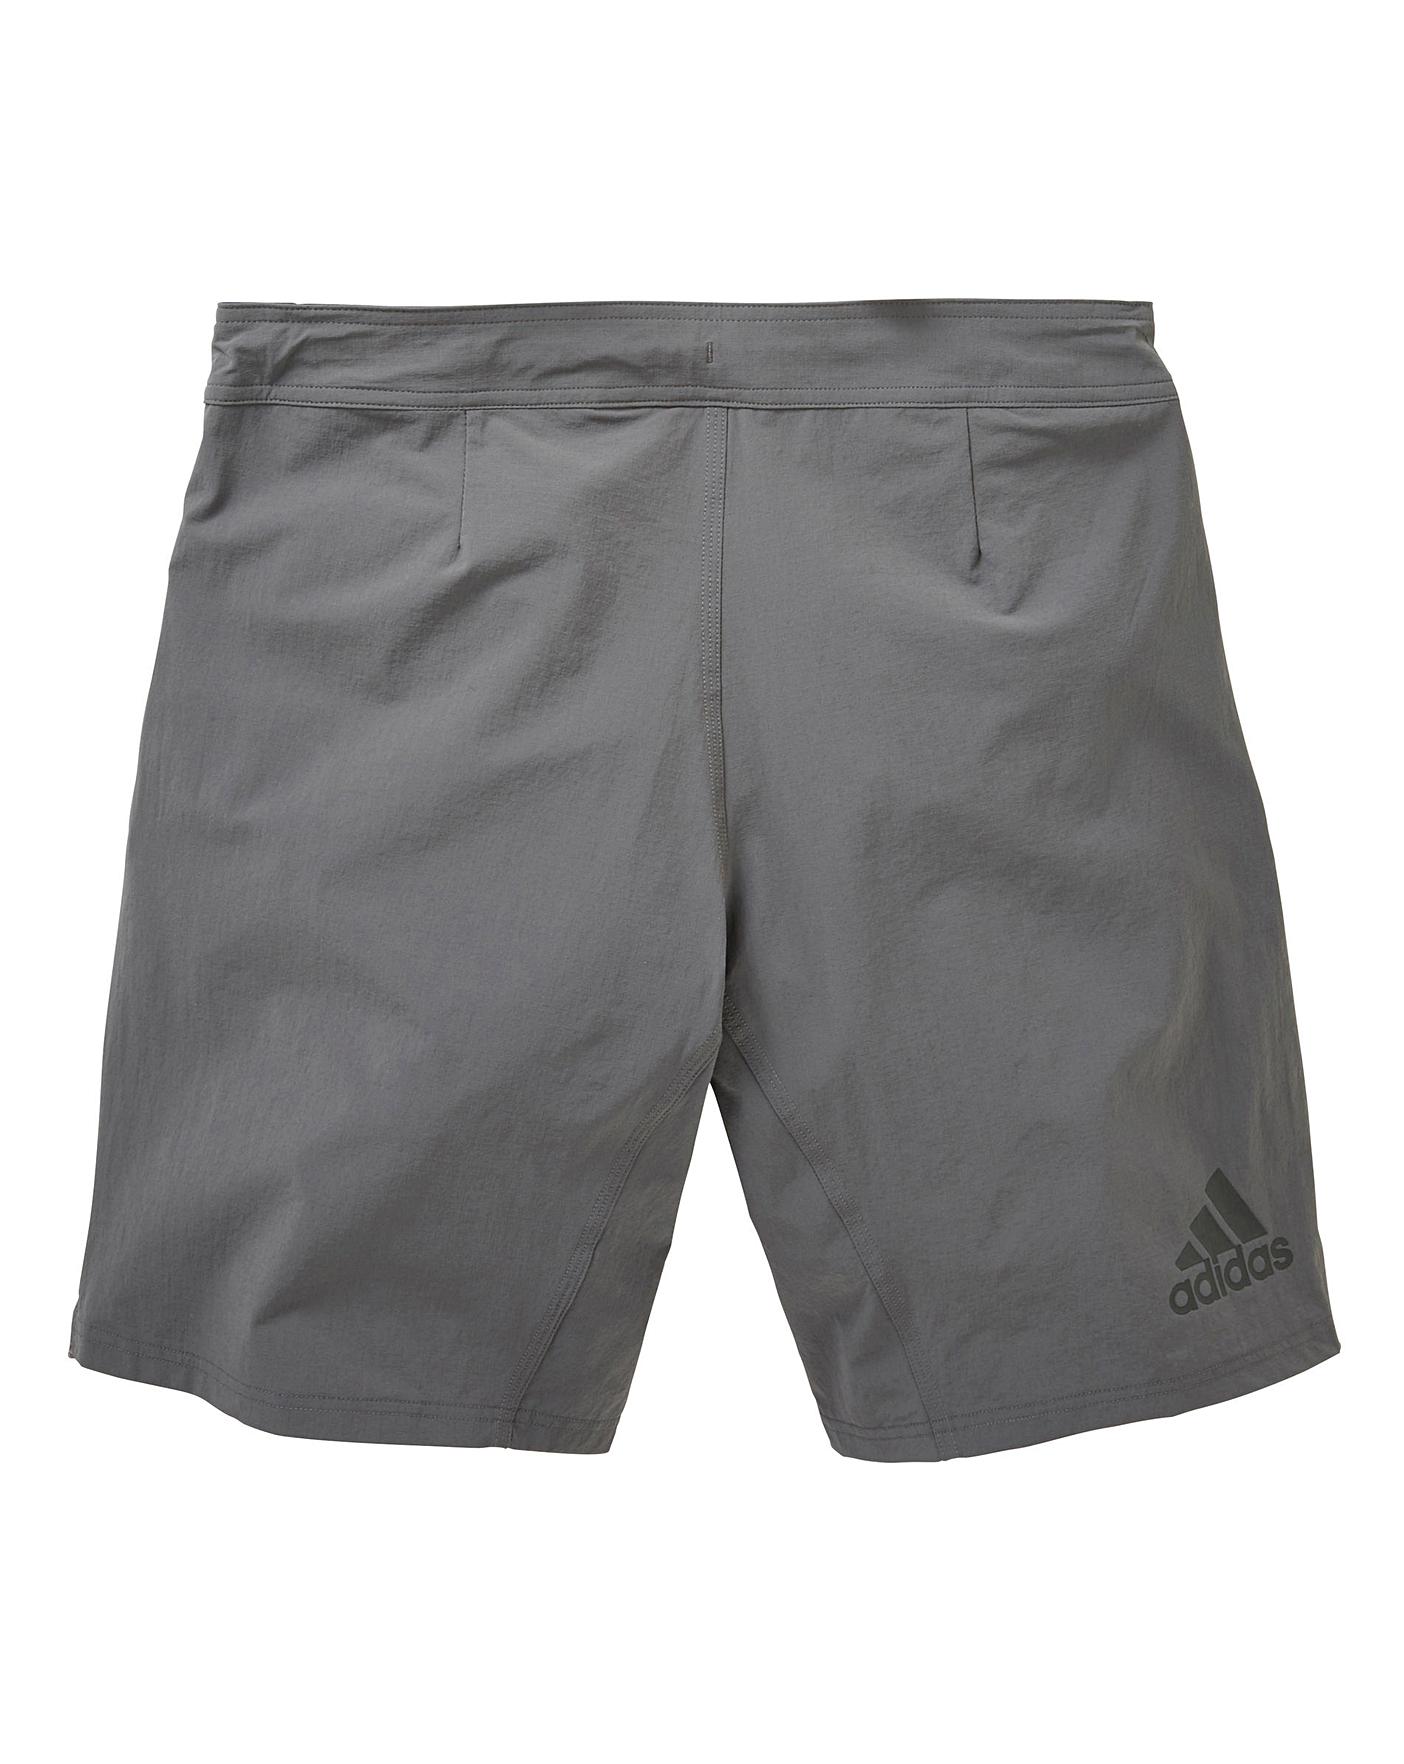 adidas training shorts with zip pockets